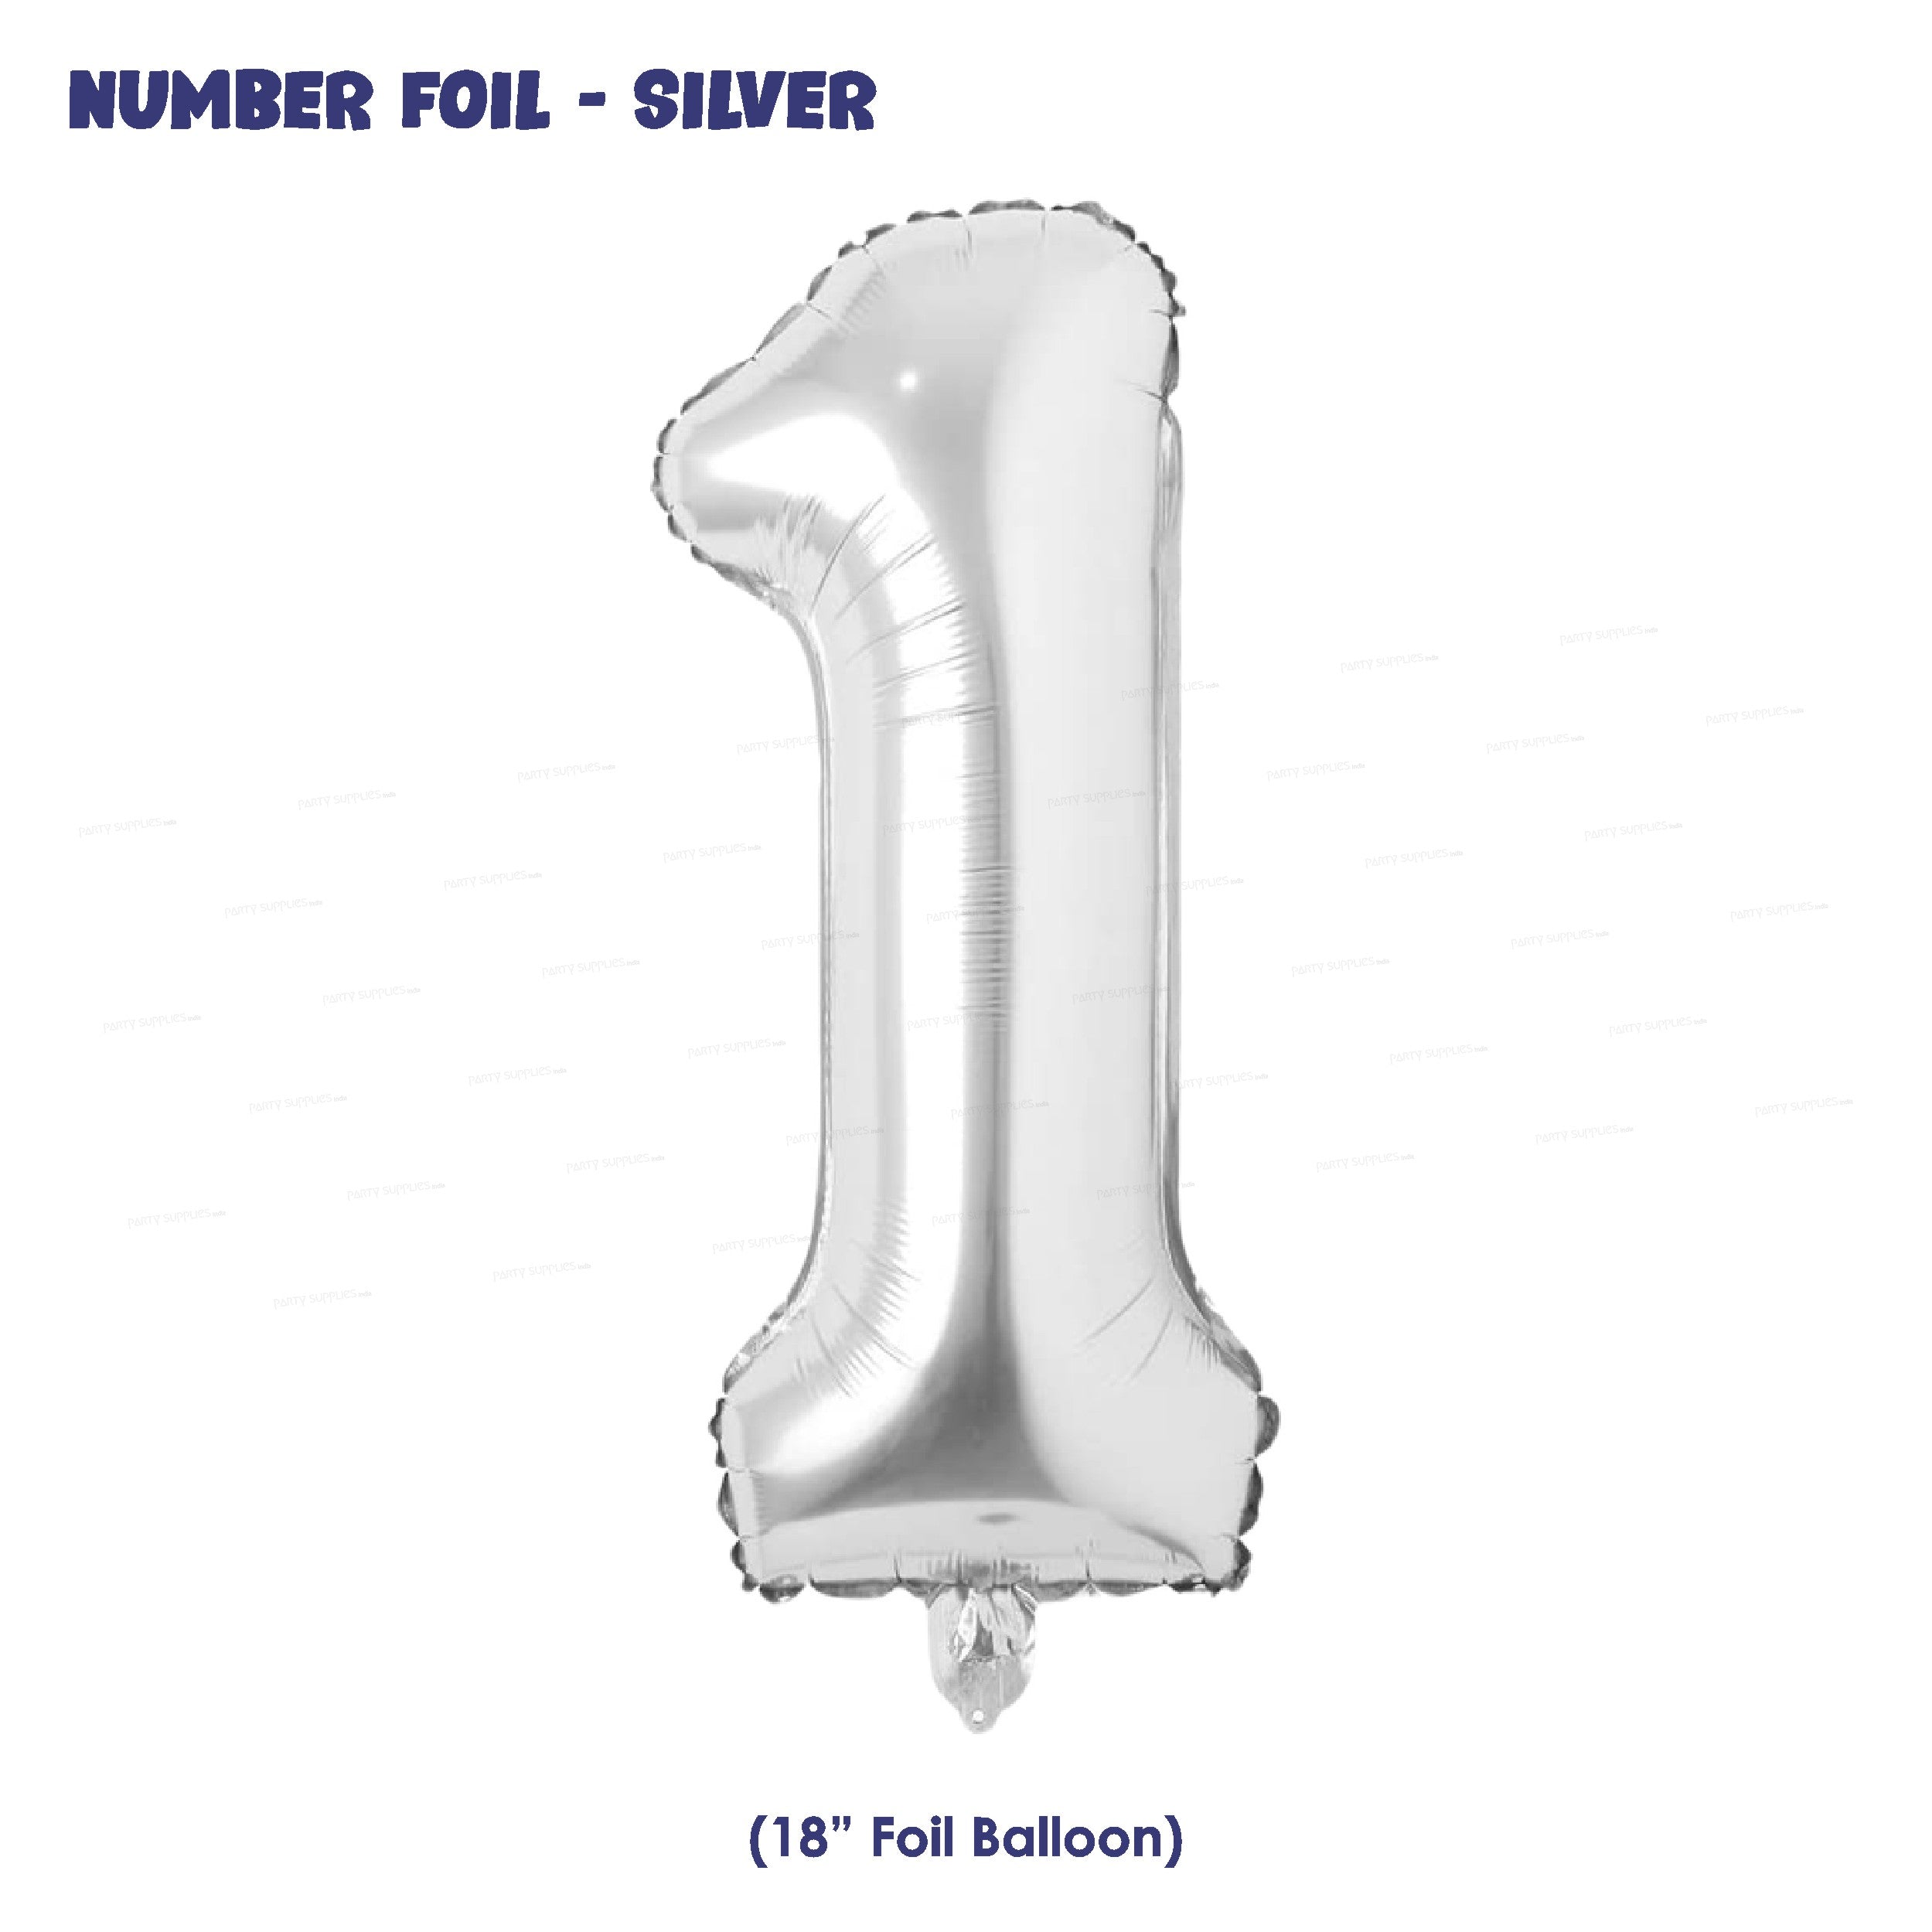 Number 1 Premium Silver Foil Balloon